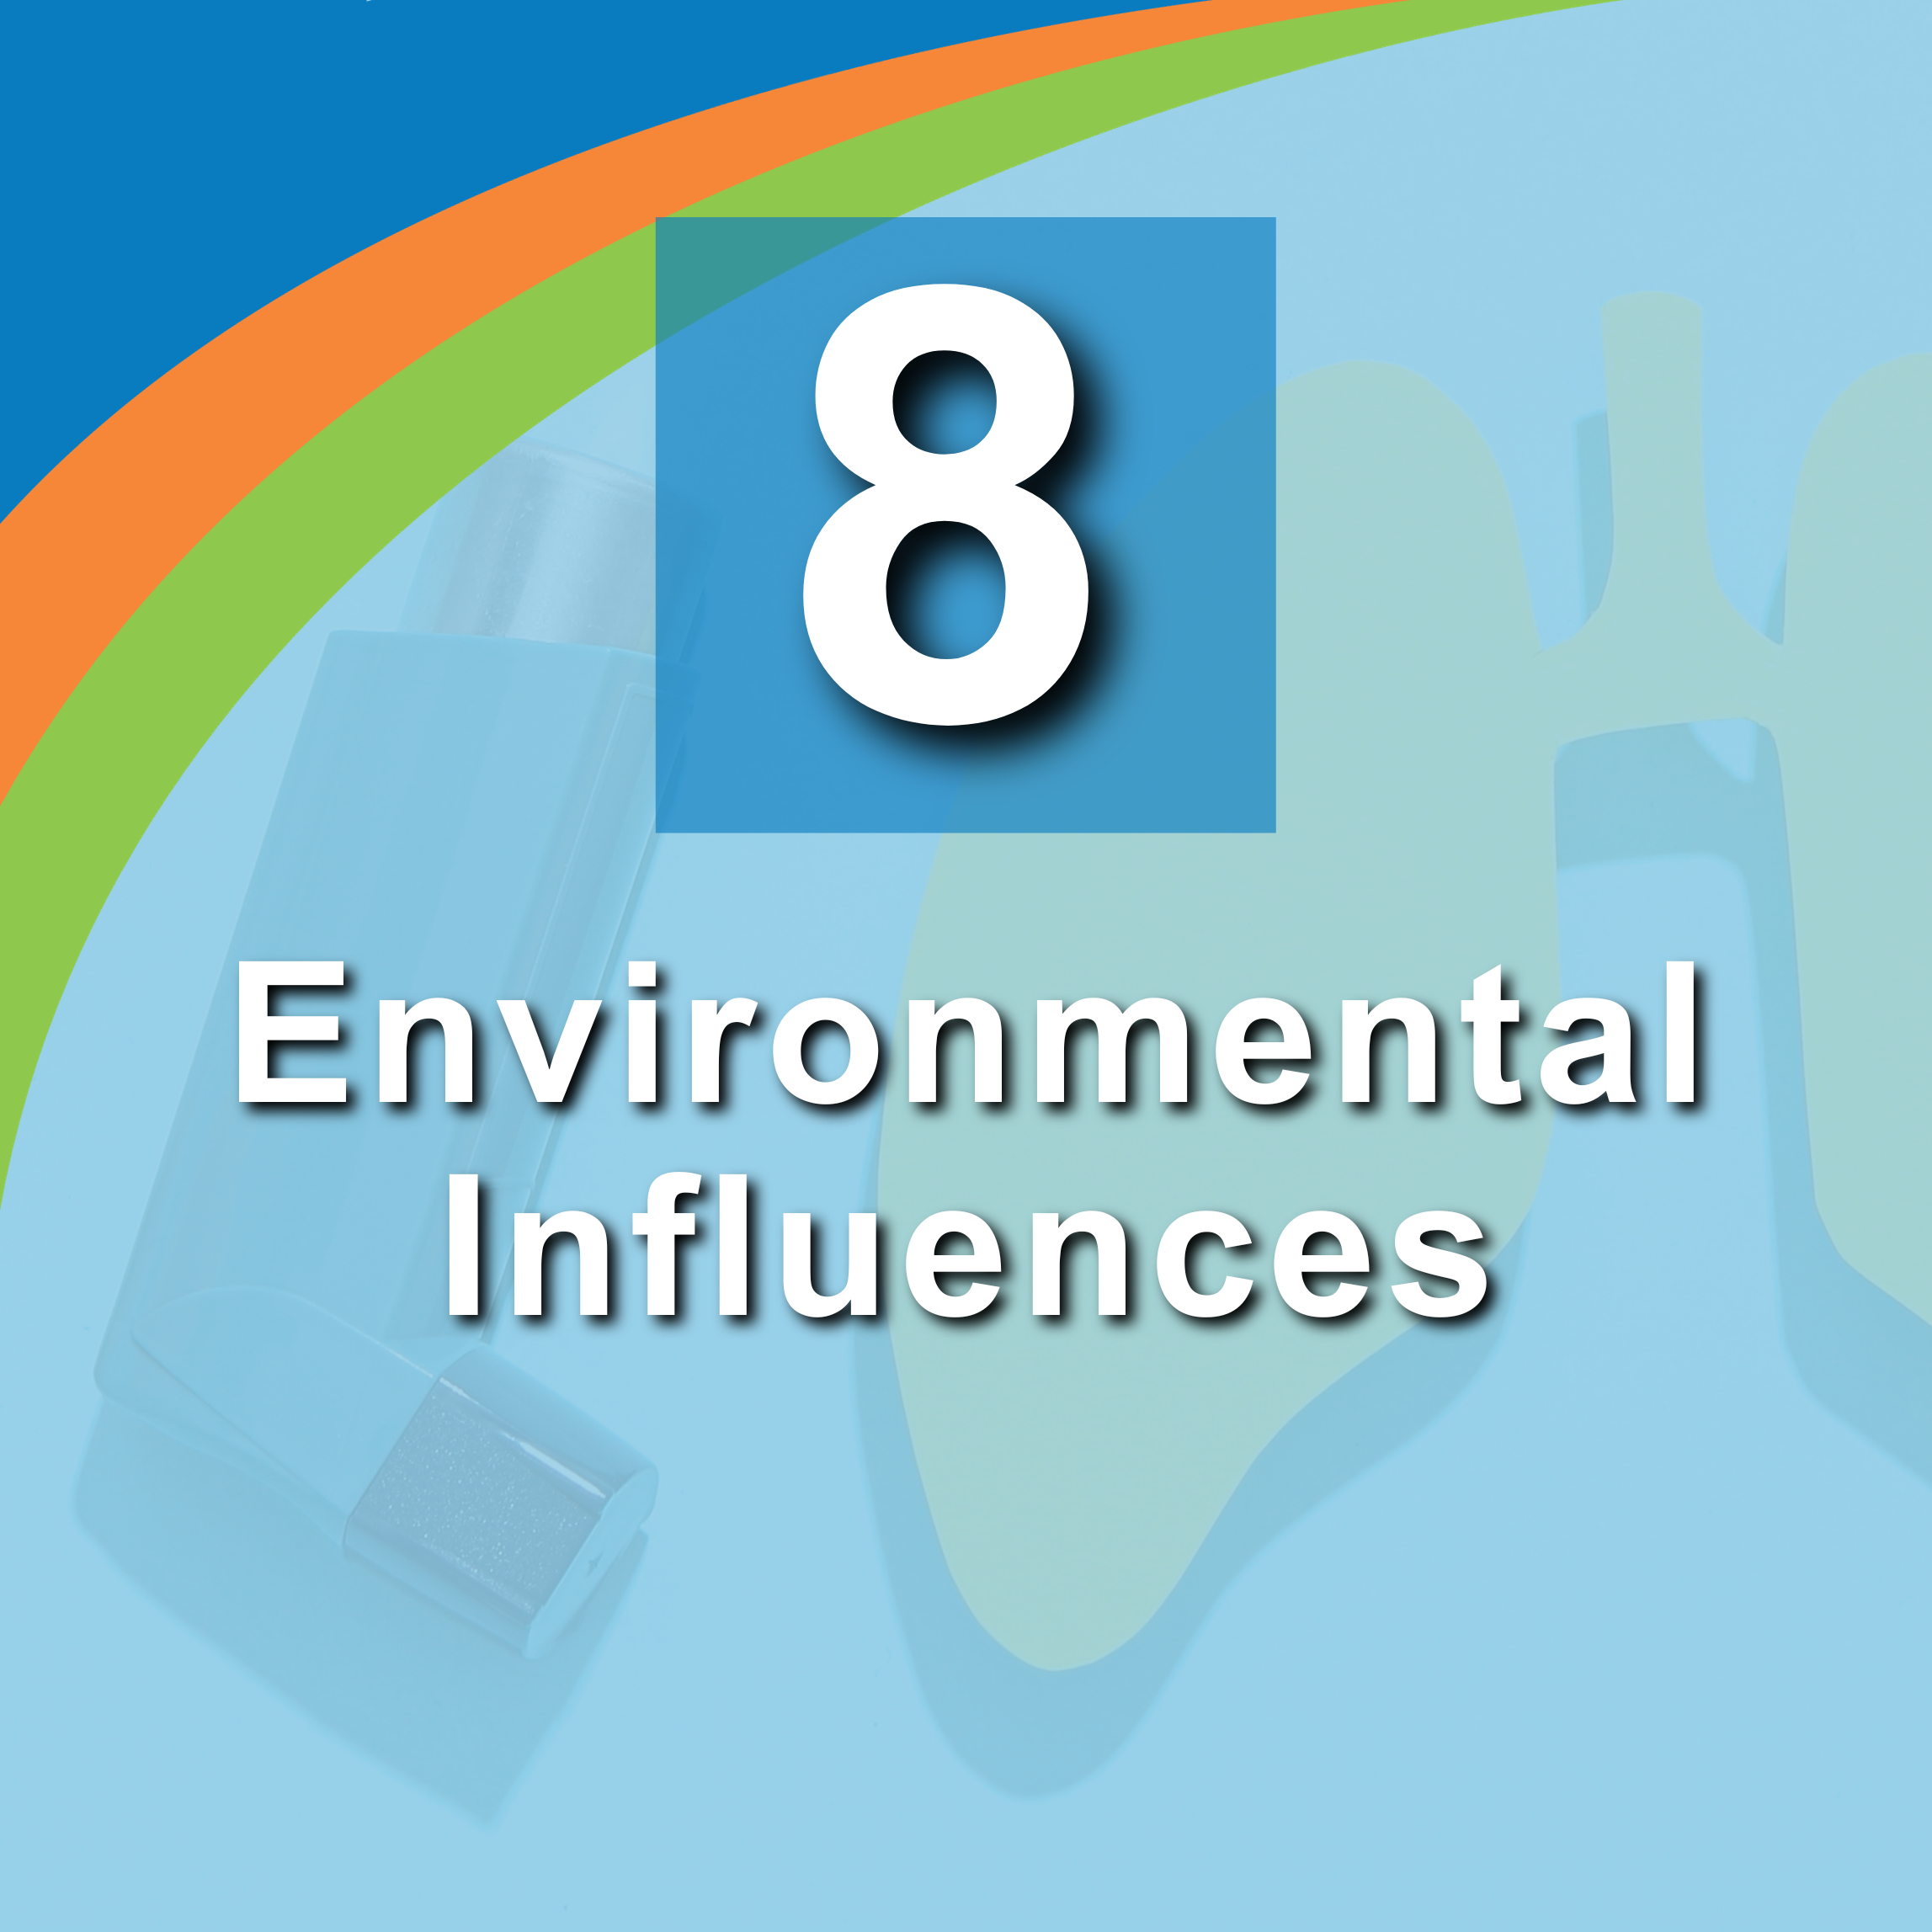 8. Enviornmental Influences